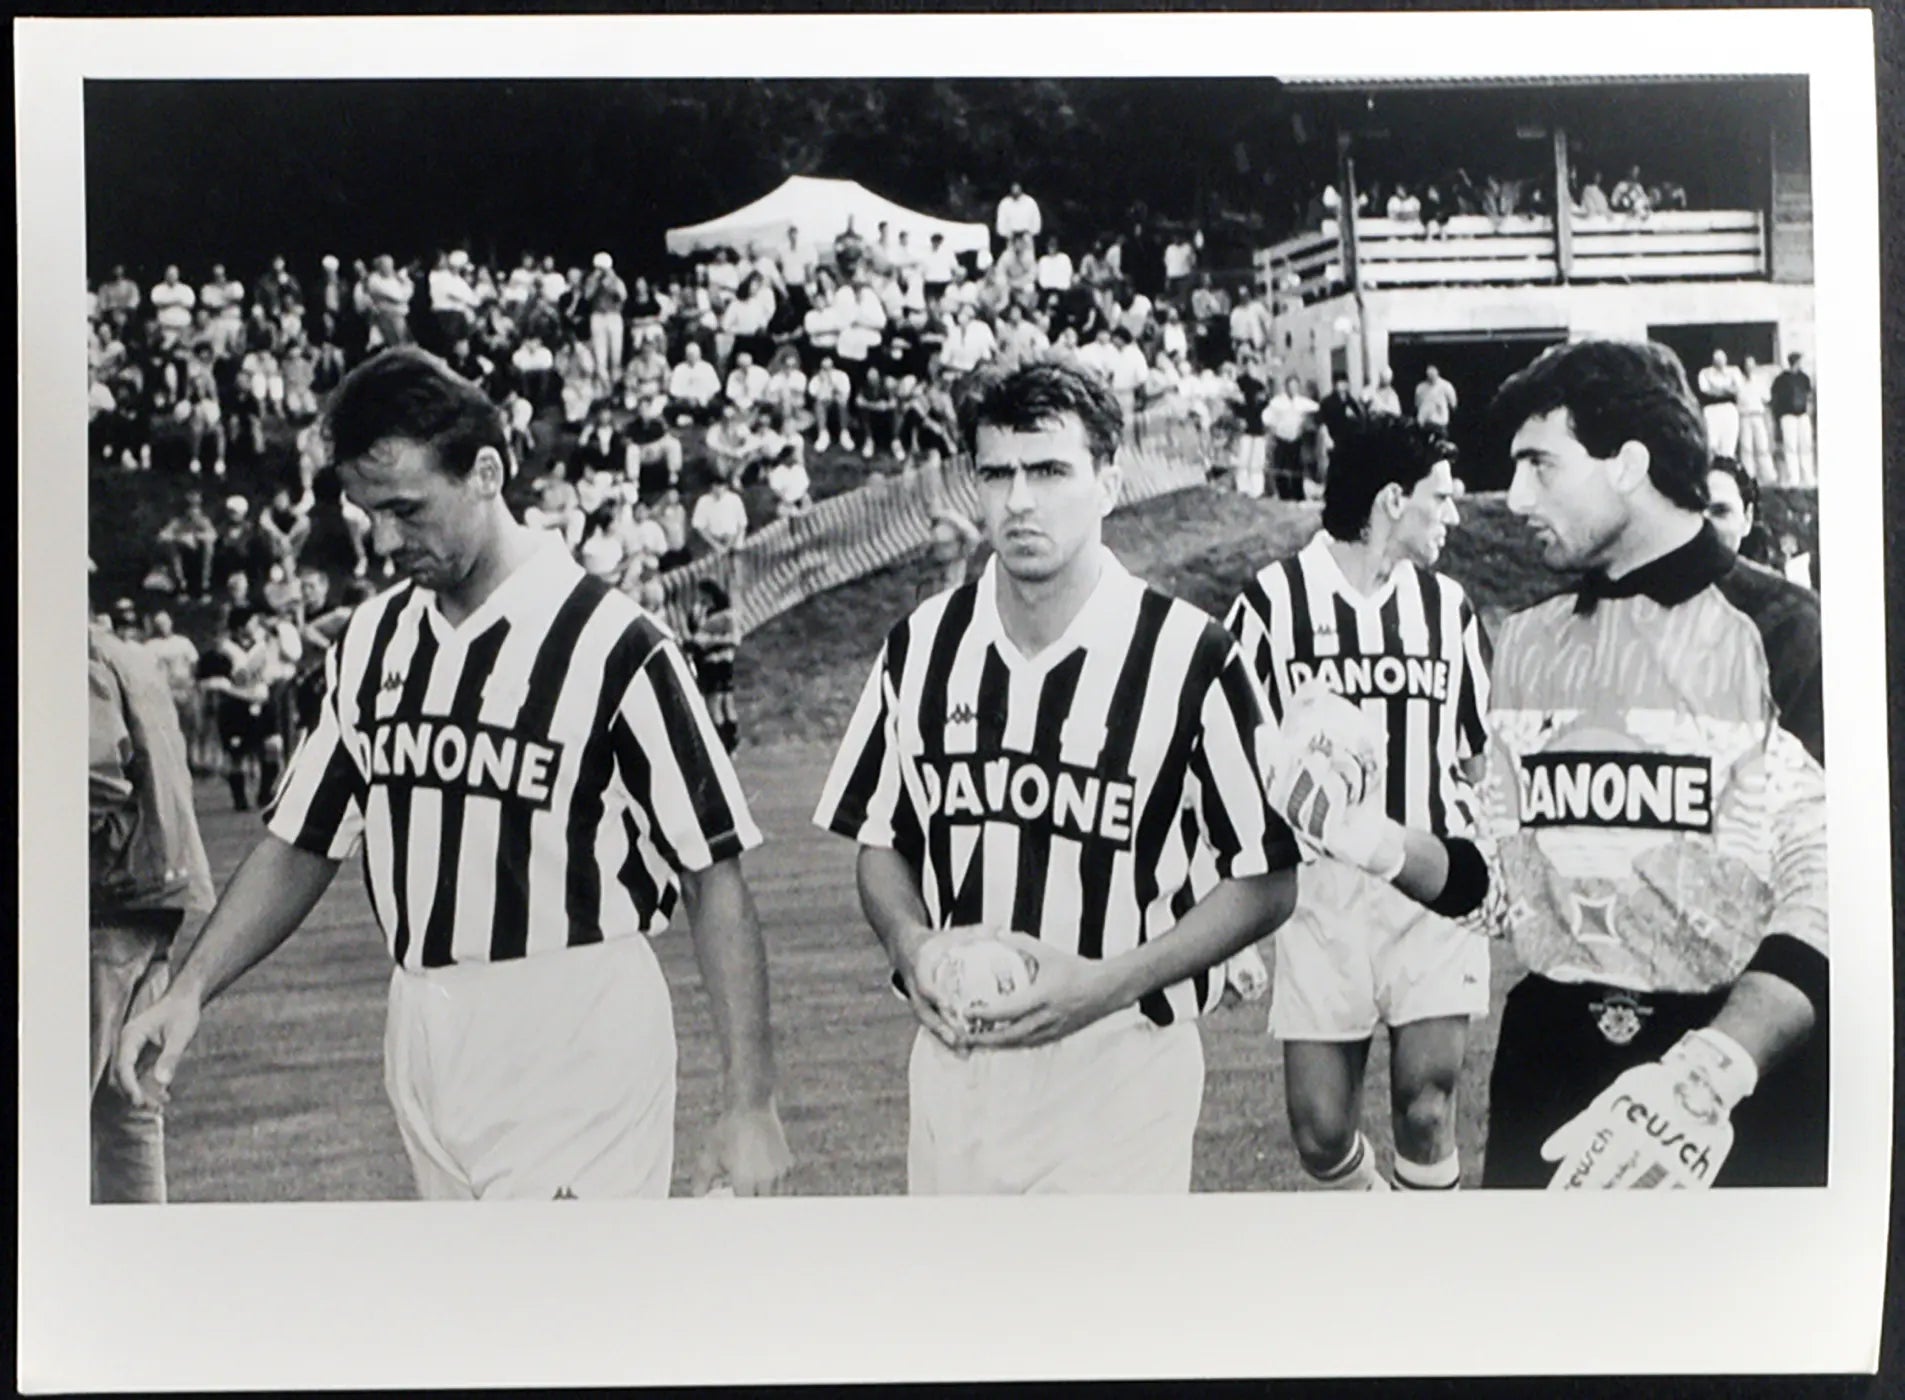 Kohler, Porrini e Peruzzi Juventus 1994 Ft 2566 - Stampa 24x18 cm - Farabola Stampa ai sali d'argento